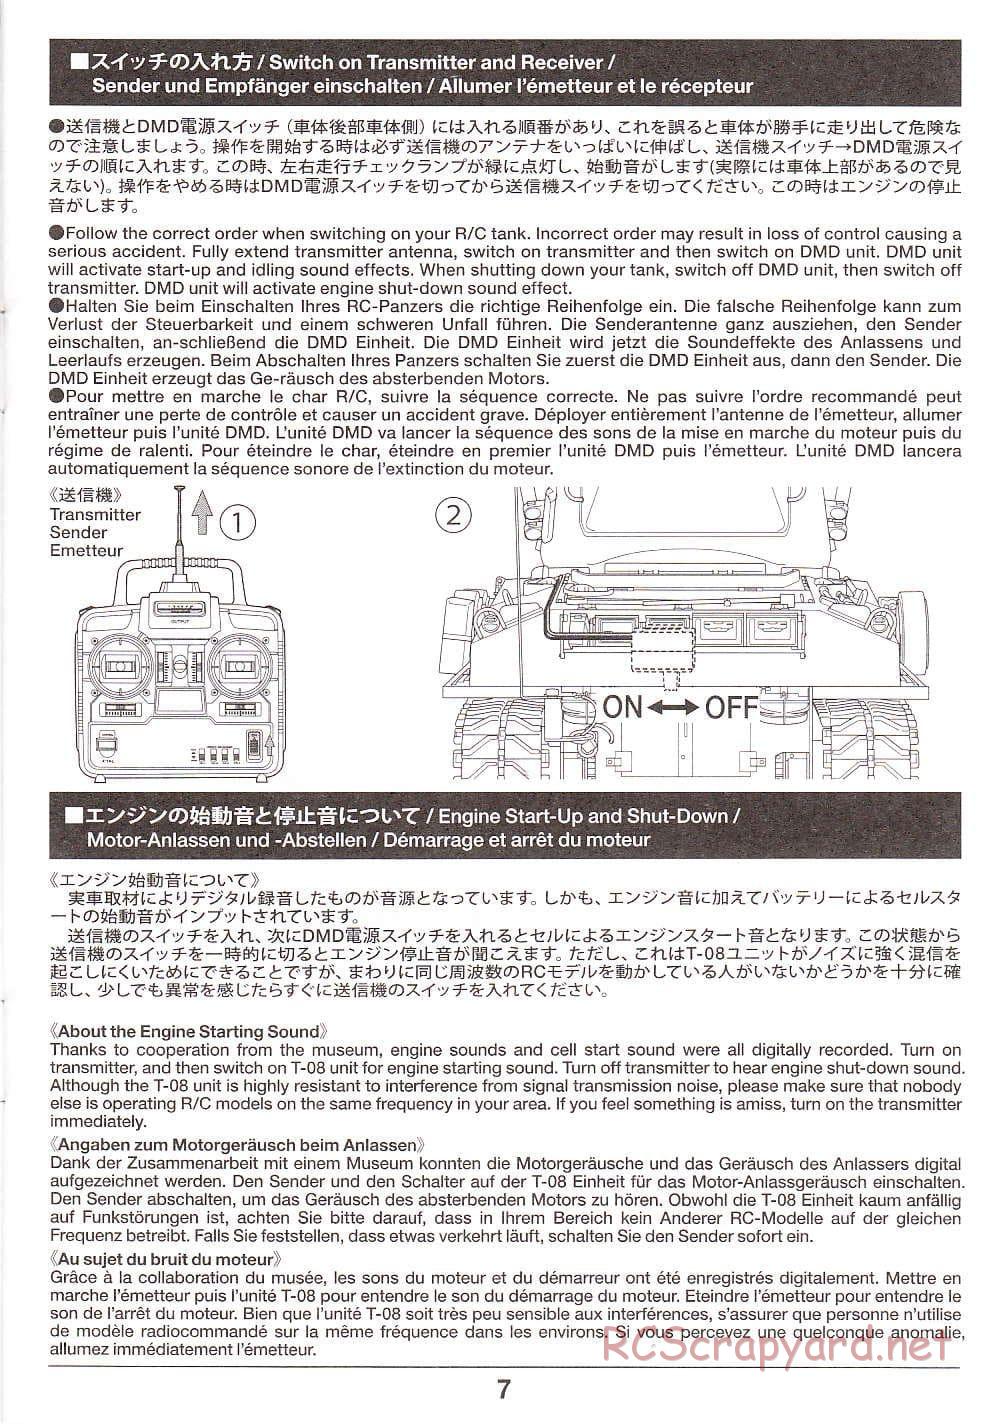 Tamiya - Super Sherman M-51 - 1/16 Scale Chassis - Operation Manual - Page 7